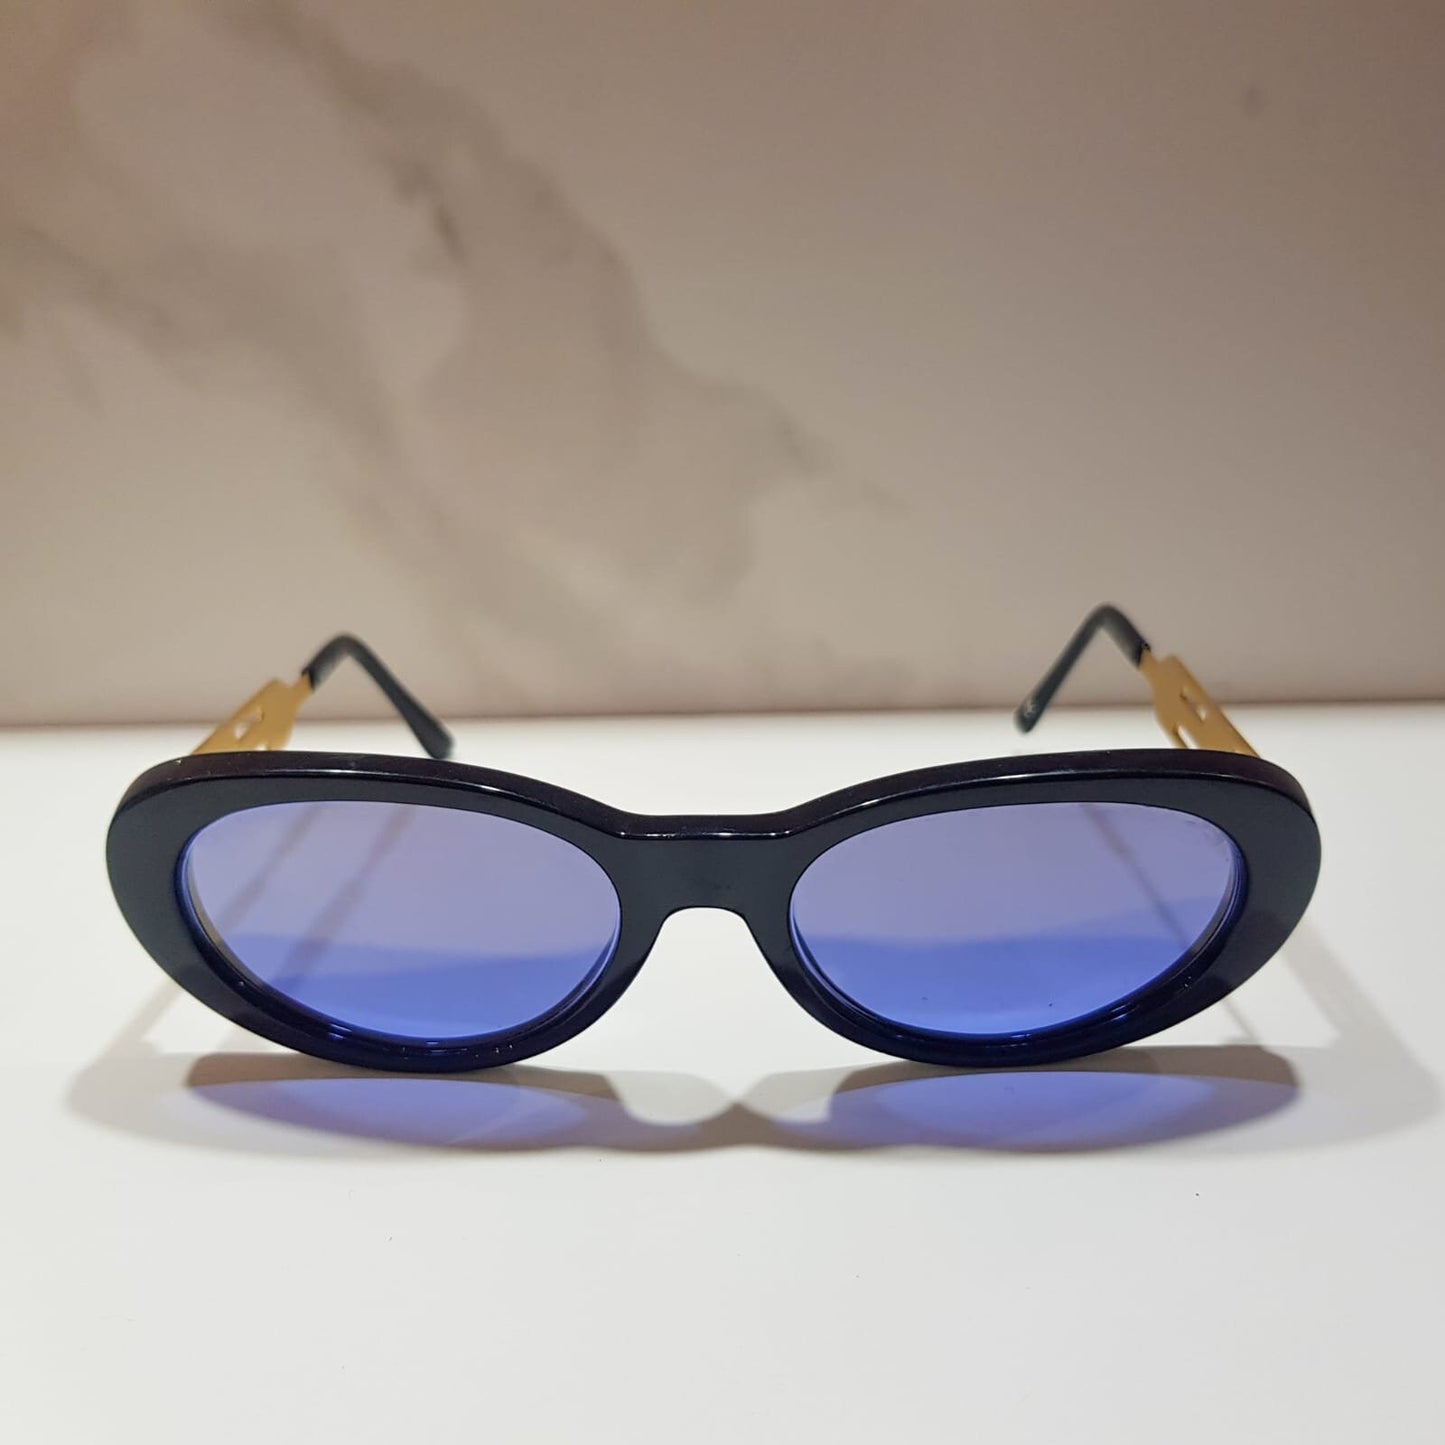 Occhiali da sole Versus Gianni Versace anni '90 occhiali lunetta brille Versace